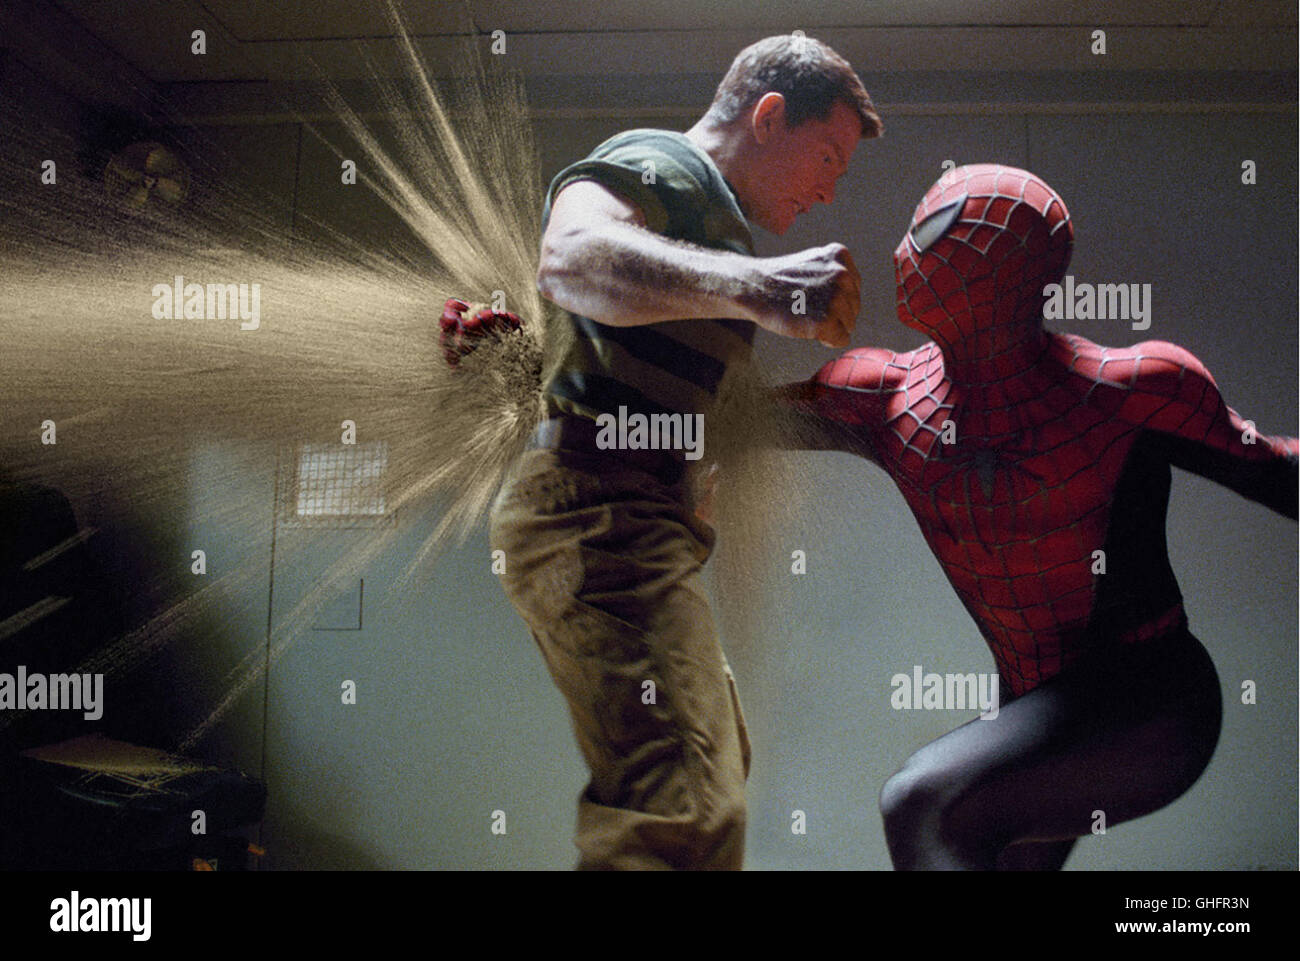 Spider-Man 3 / Flint Marko alias Sandman (Thomas Haden Church) y Spiderman (Tobey Maguire) Regie: Sam Raimi aka. Spider-Man 3 Foto de stock